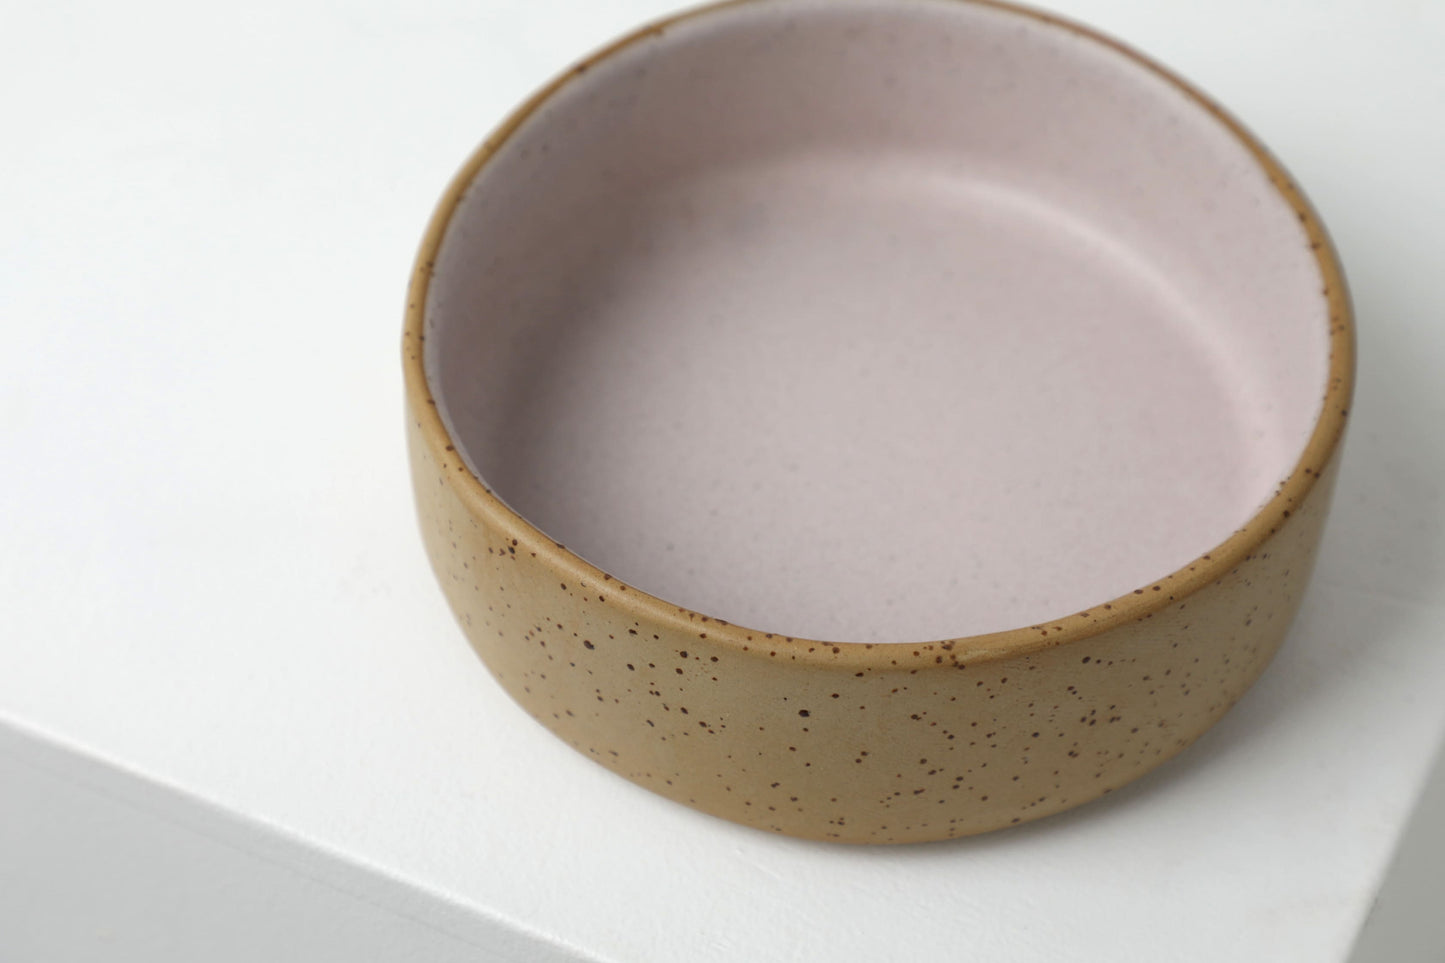 Handmade ceramic dog bowls | RAW+PASTEL PINK - premium dog goods handmade in Europe by My Wild Other